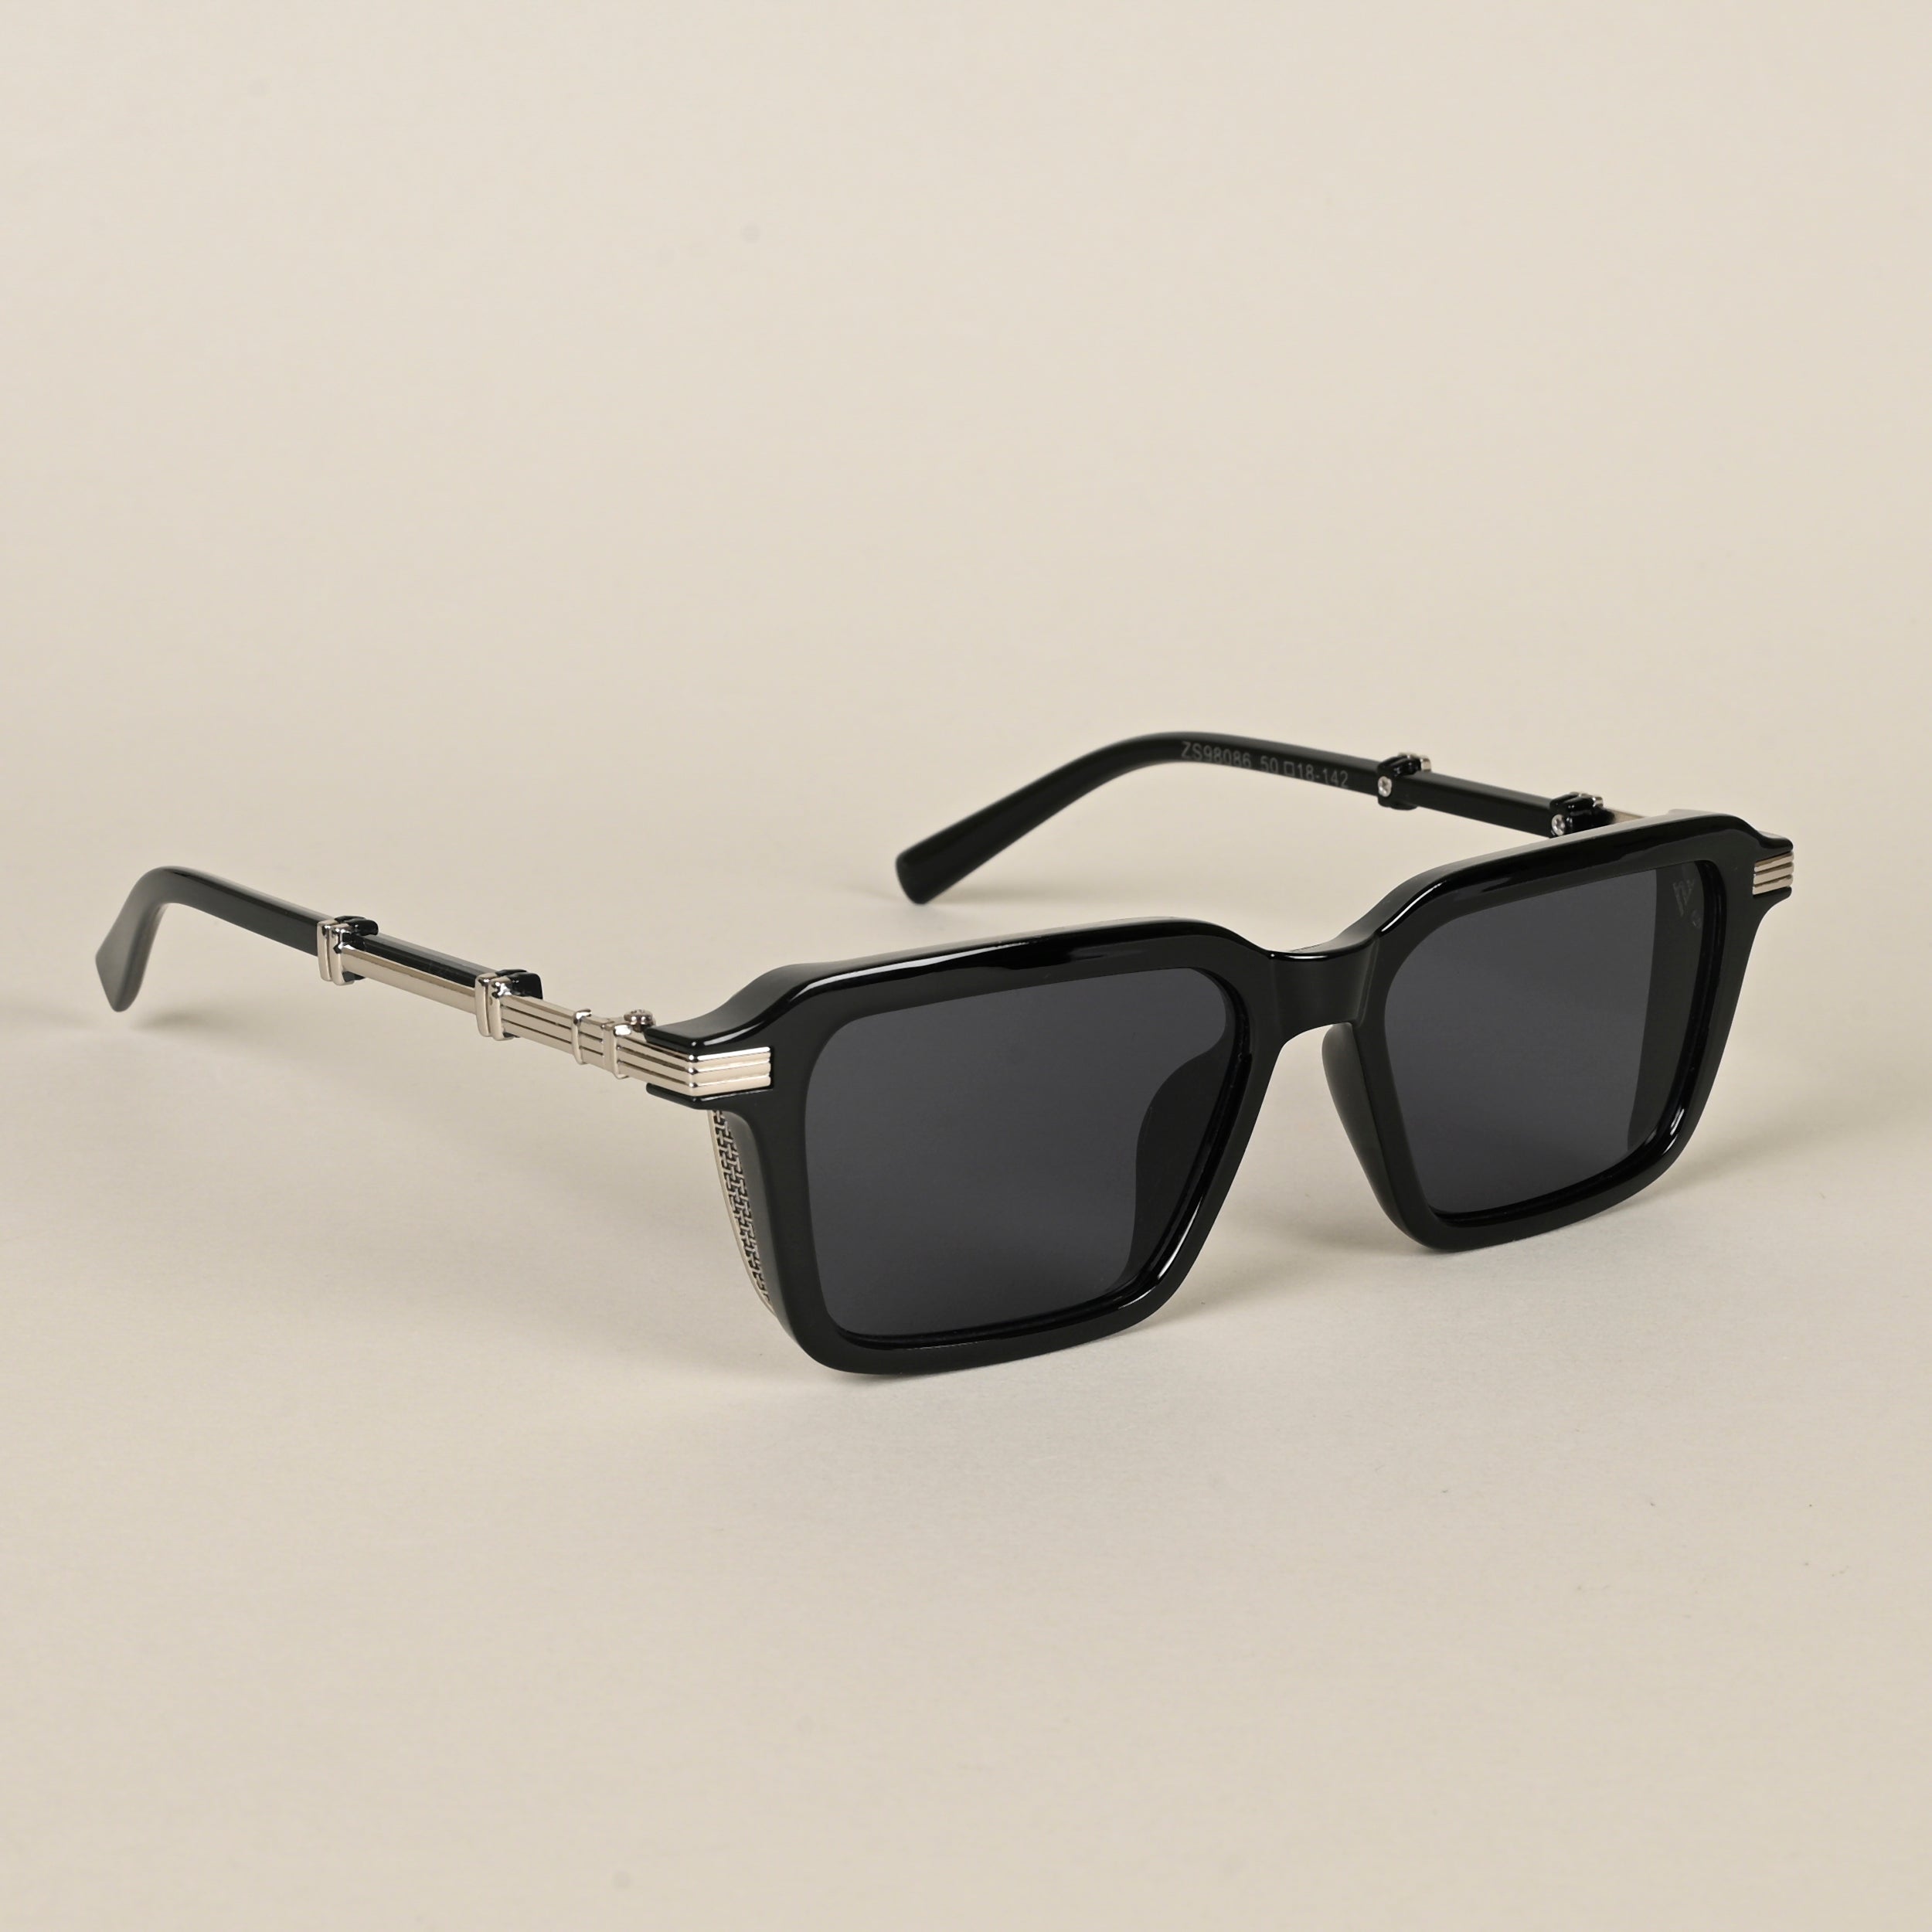 Voyage Black Wayfarer Sunglasses for Men & Women (98086MG4568)